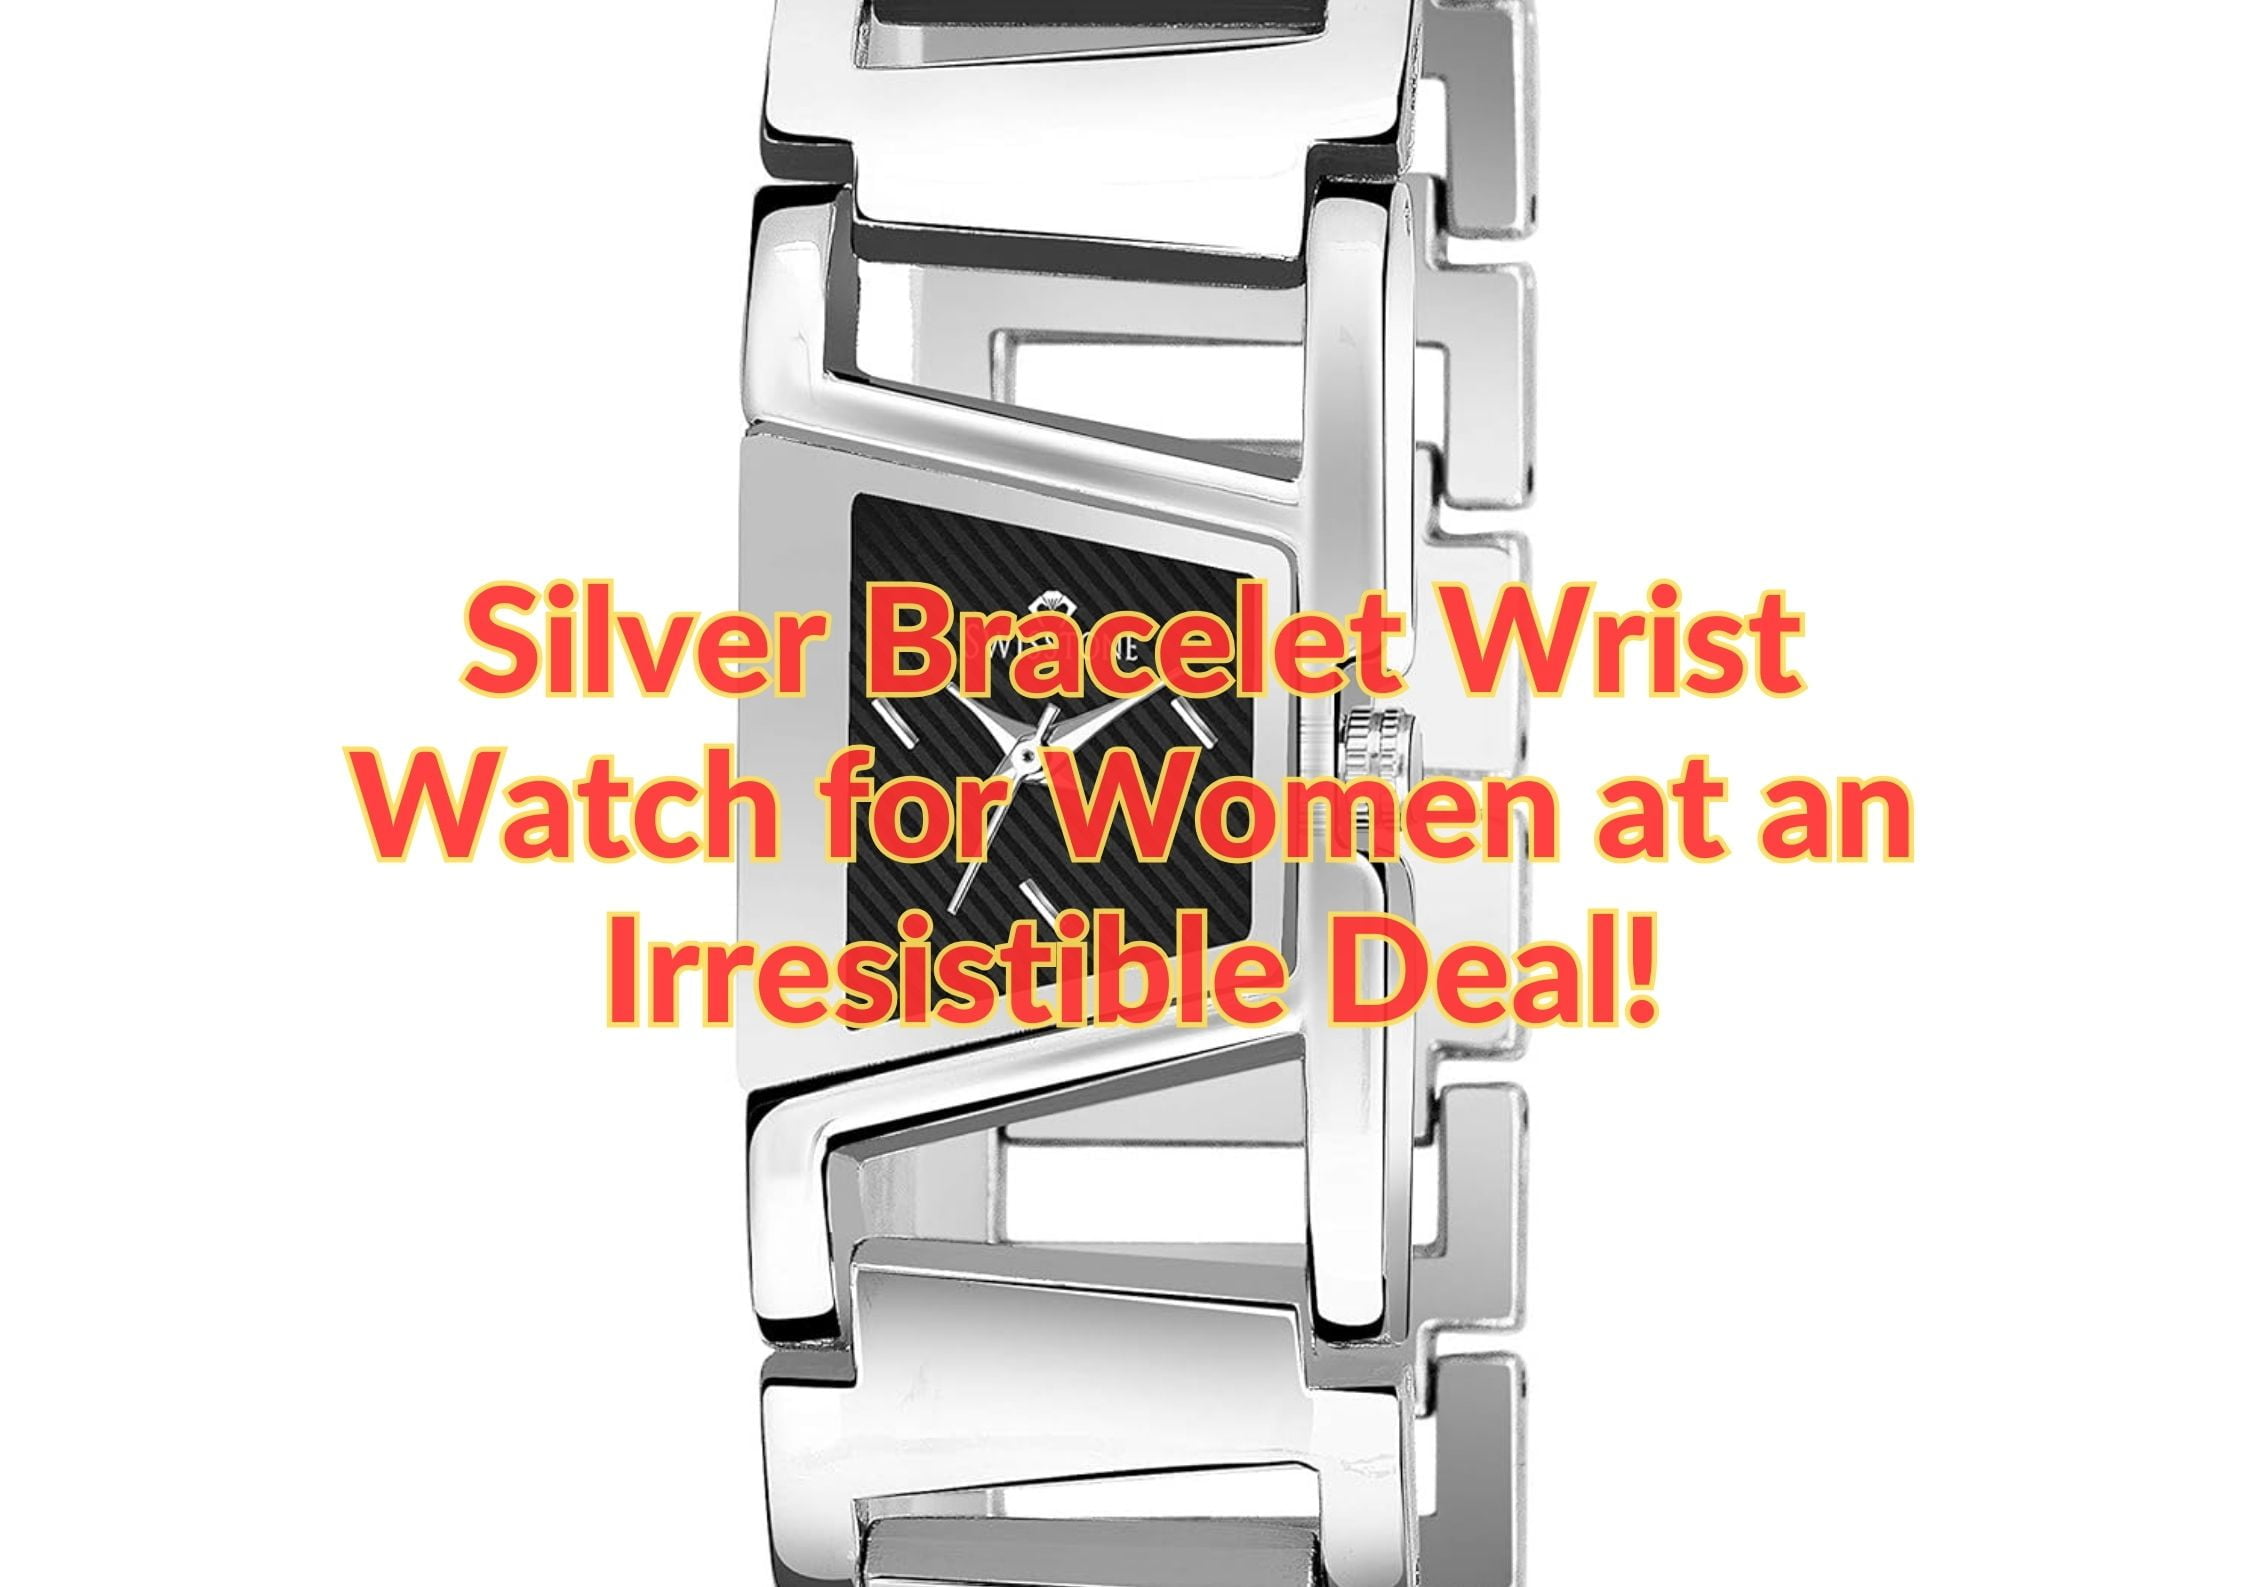 Silver Bracelet Wrist Watch for Women at an Irresistible Deal!